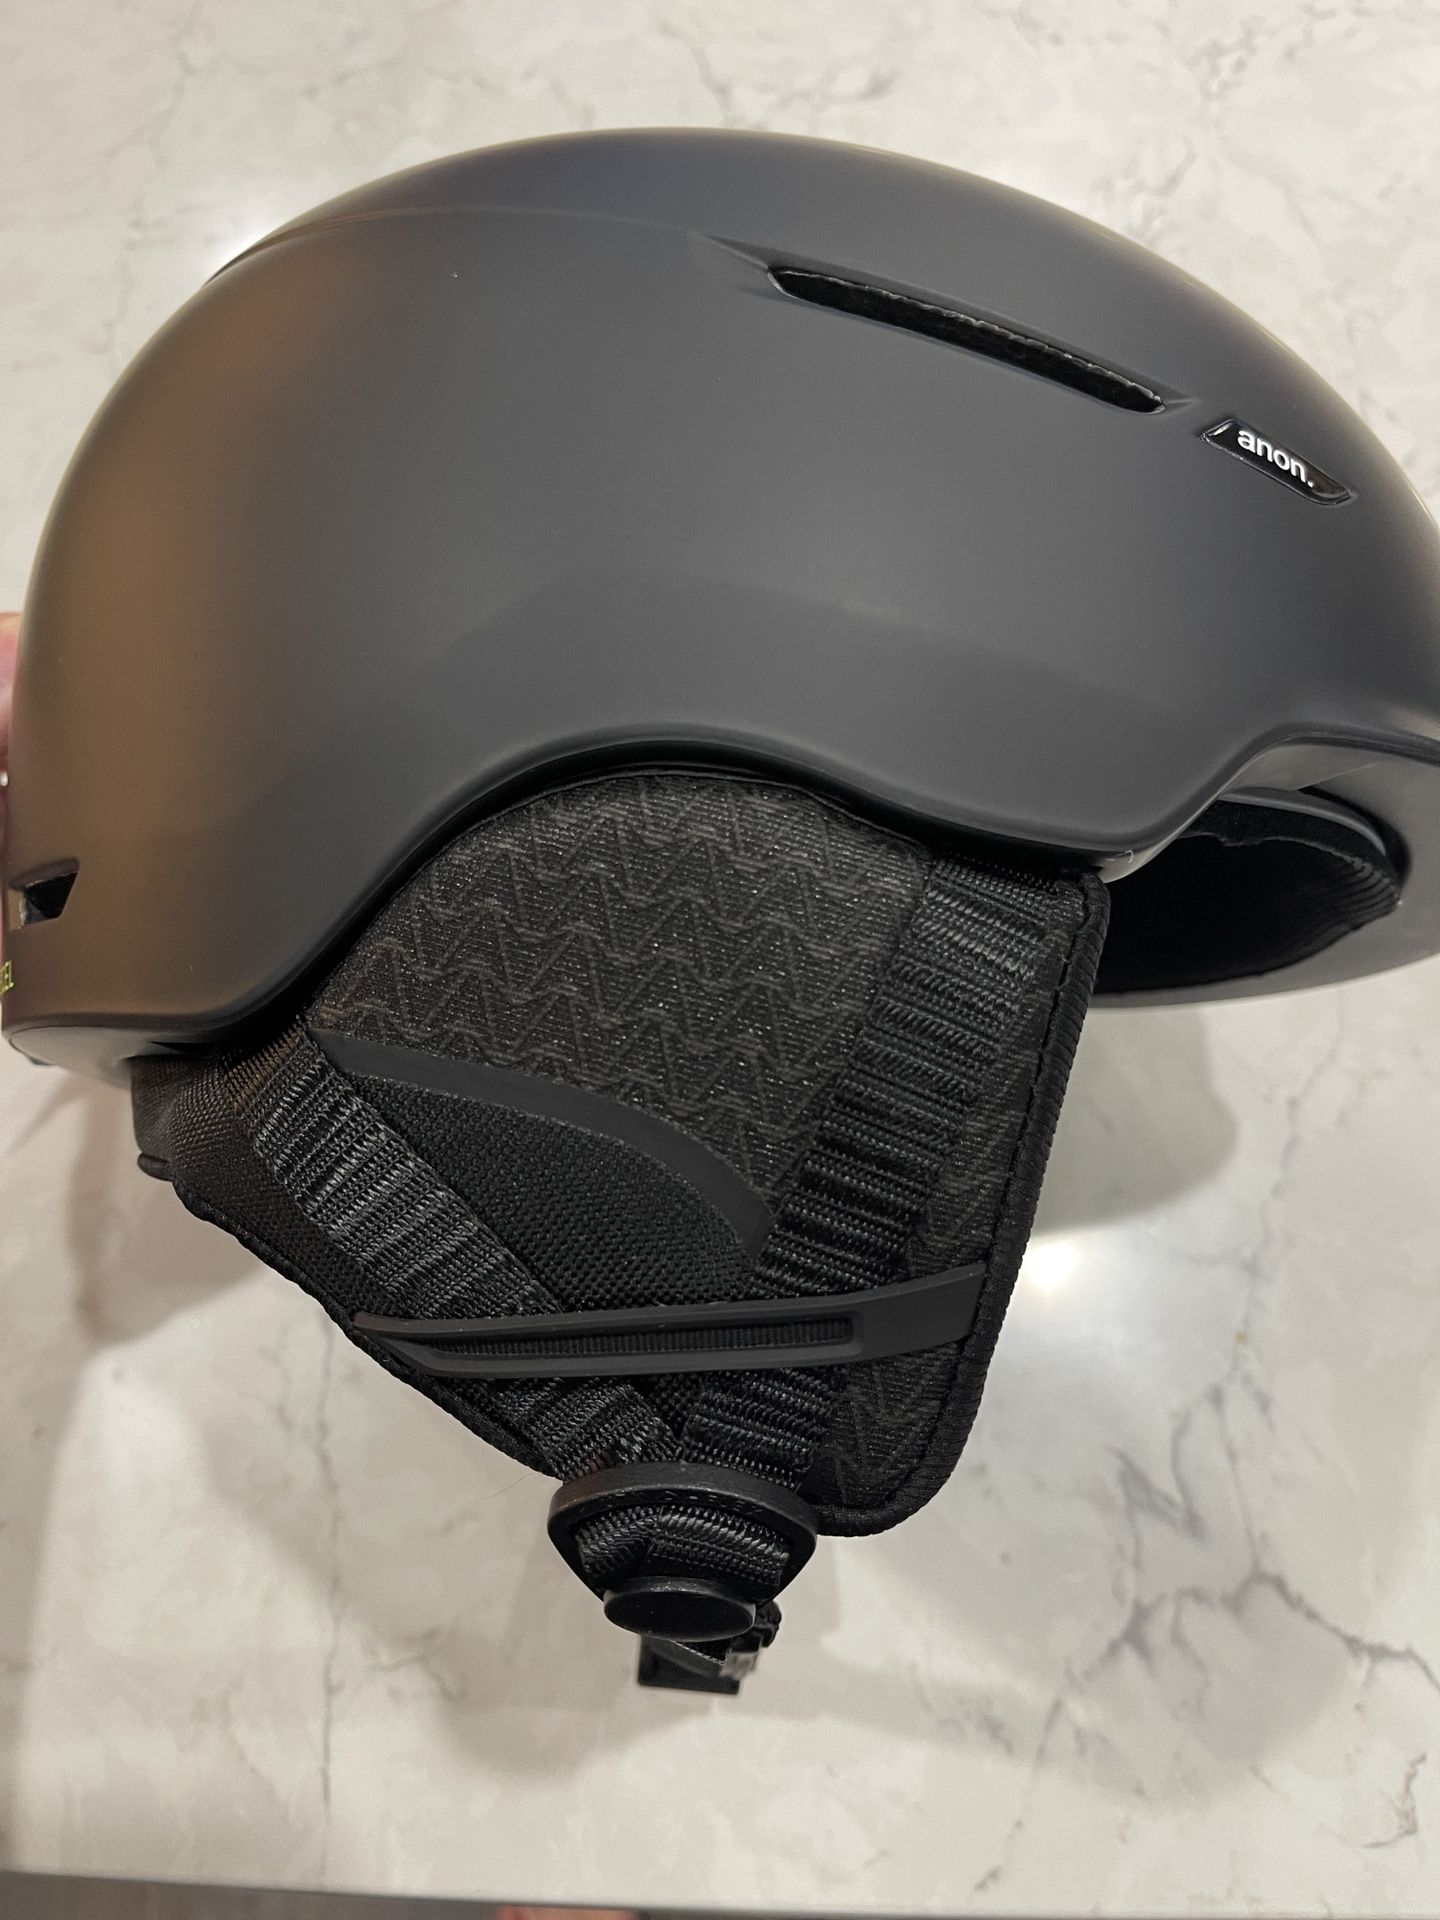 Anon Ski/Snowboard Helmet - Wavecel Technology - Size Medium - LIKE NEW 